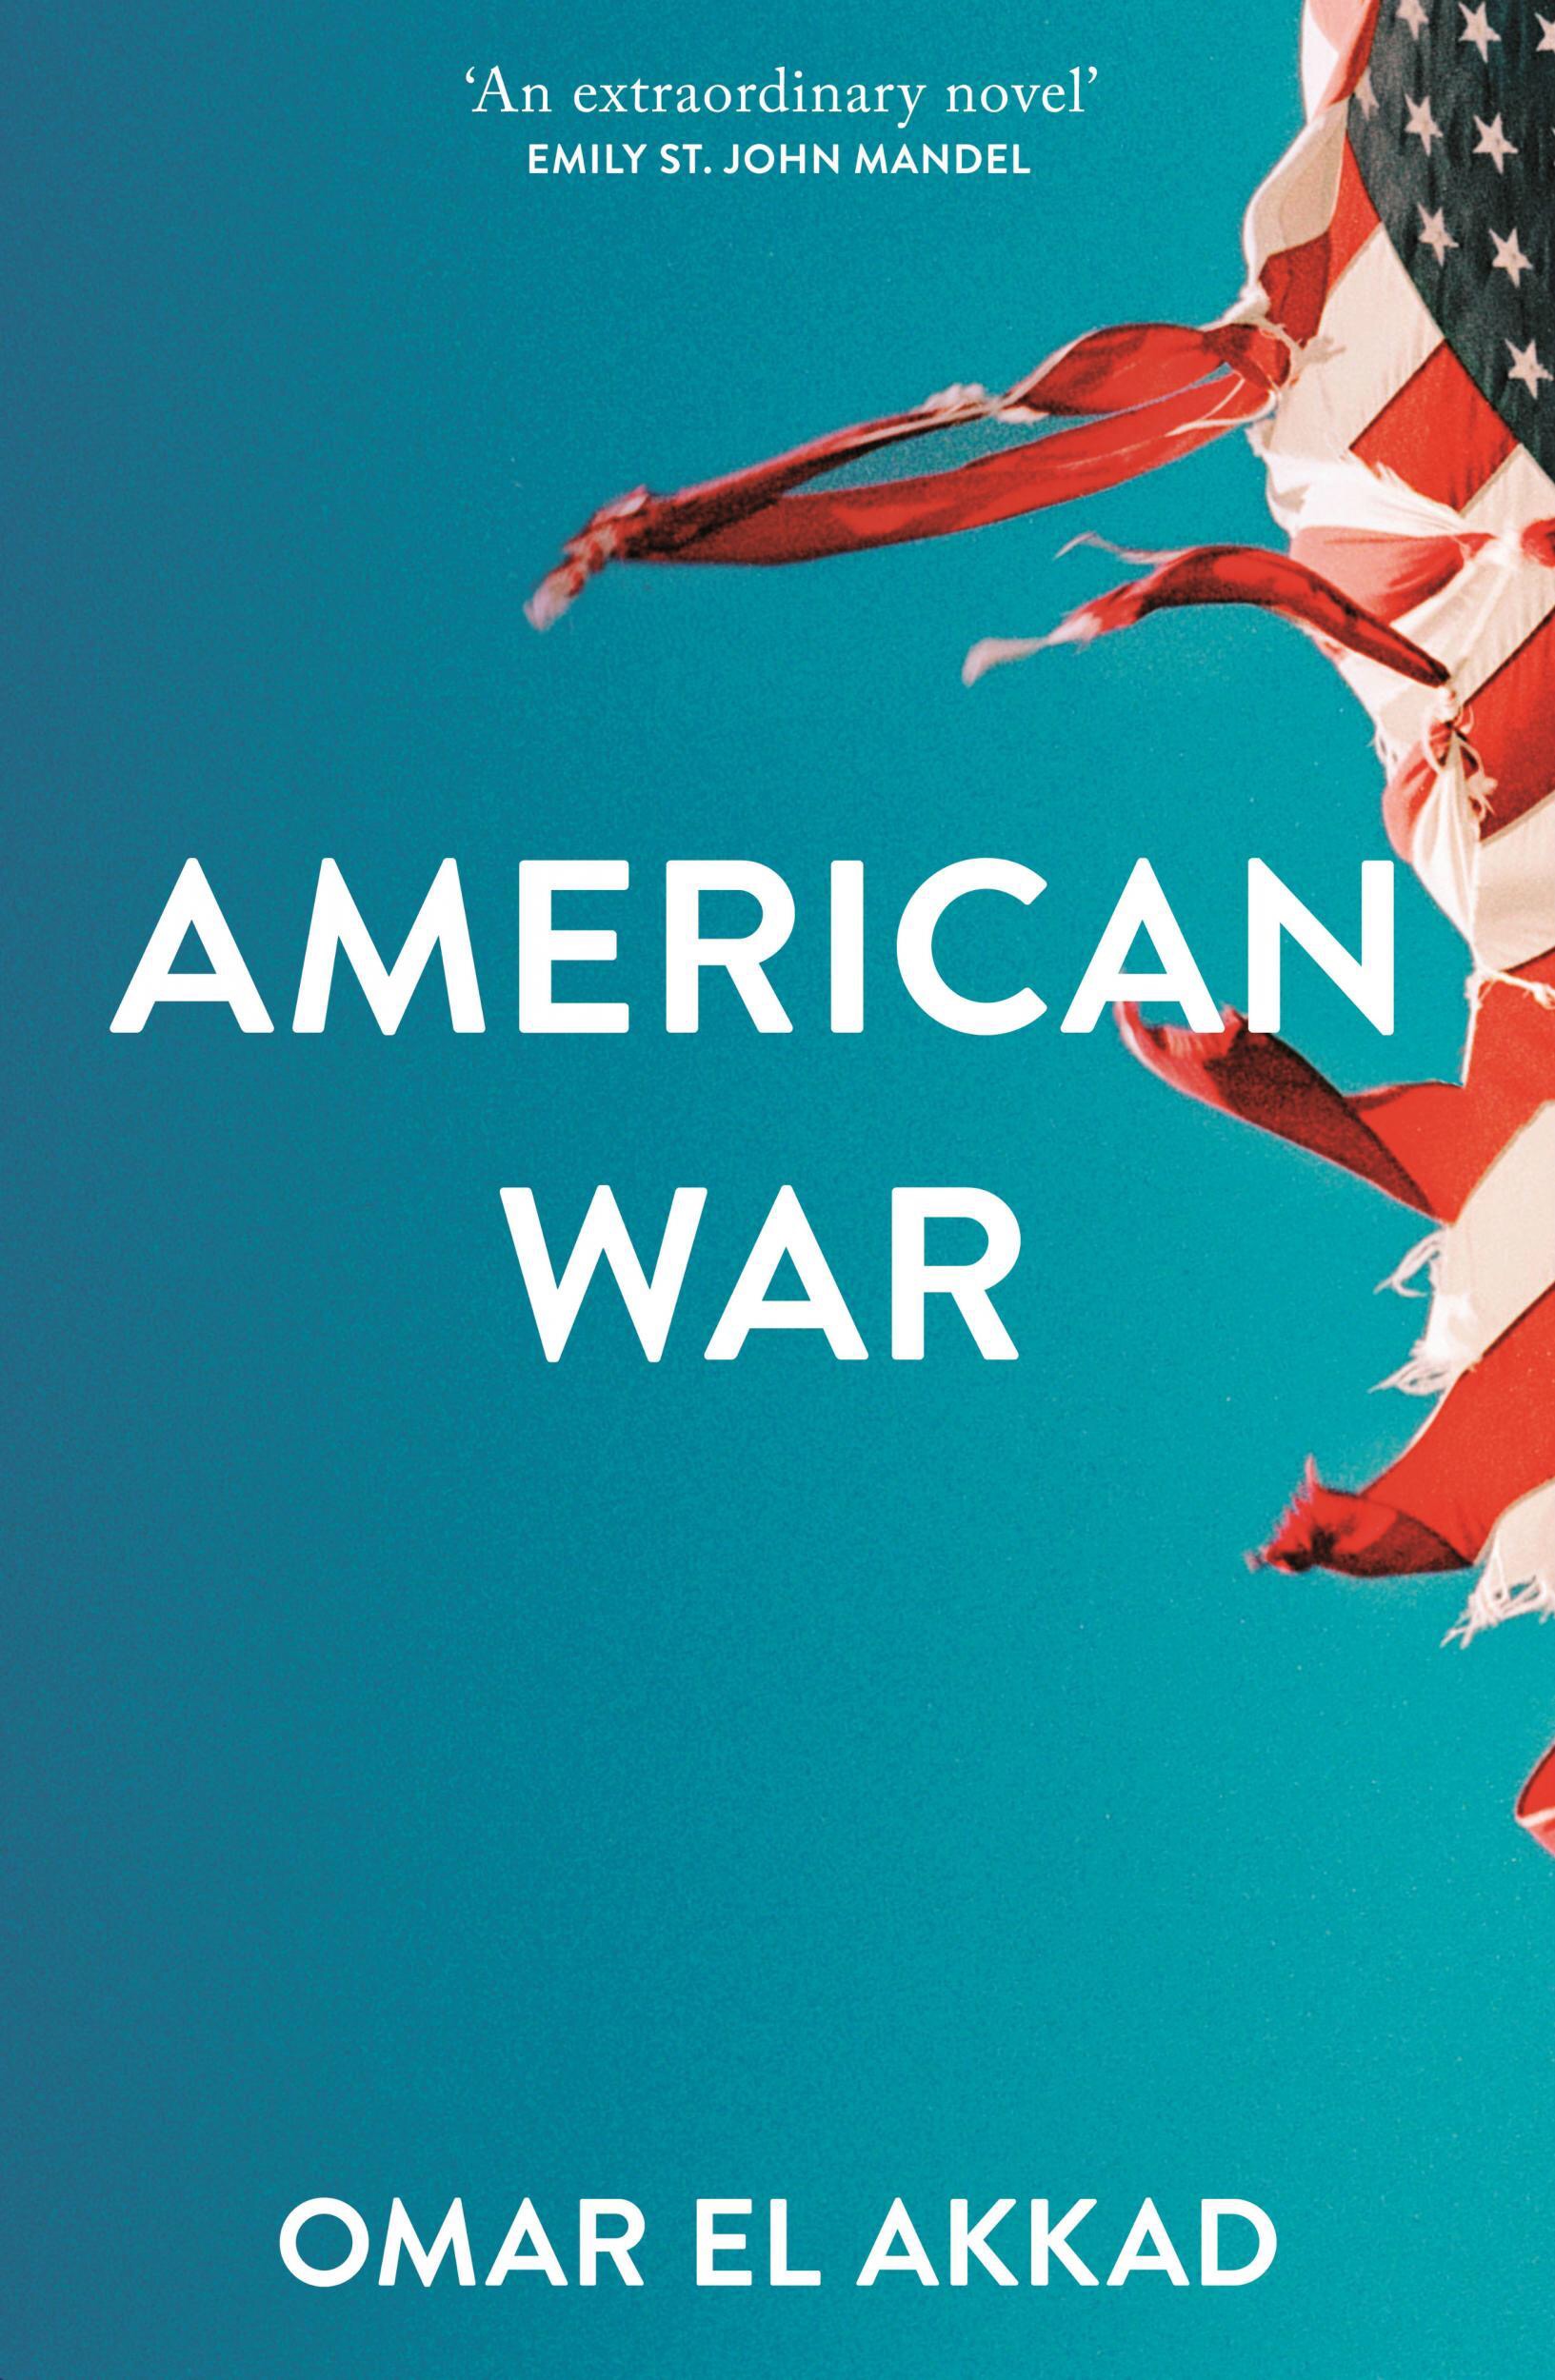 American War (2017, Pan Macmillan)